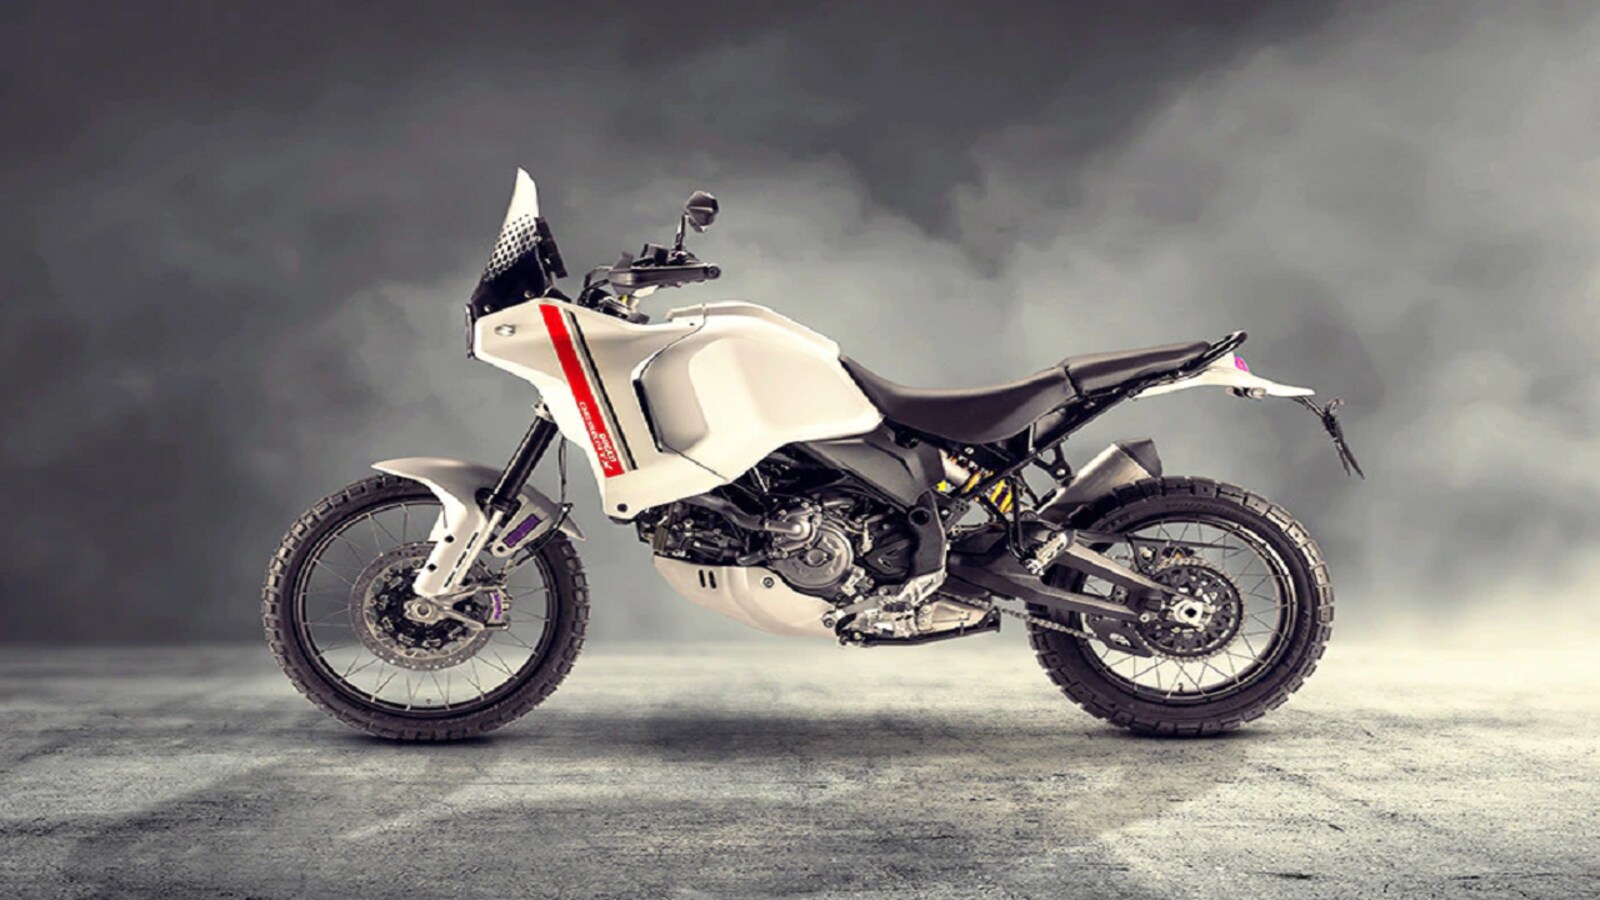 Ducati launch new off-road focused DesertX Adventure bike